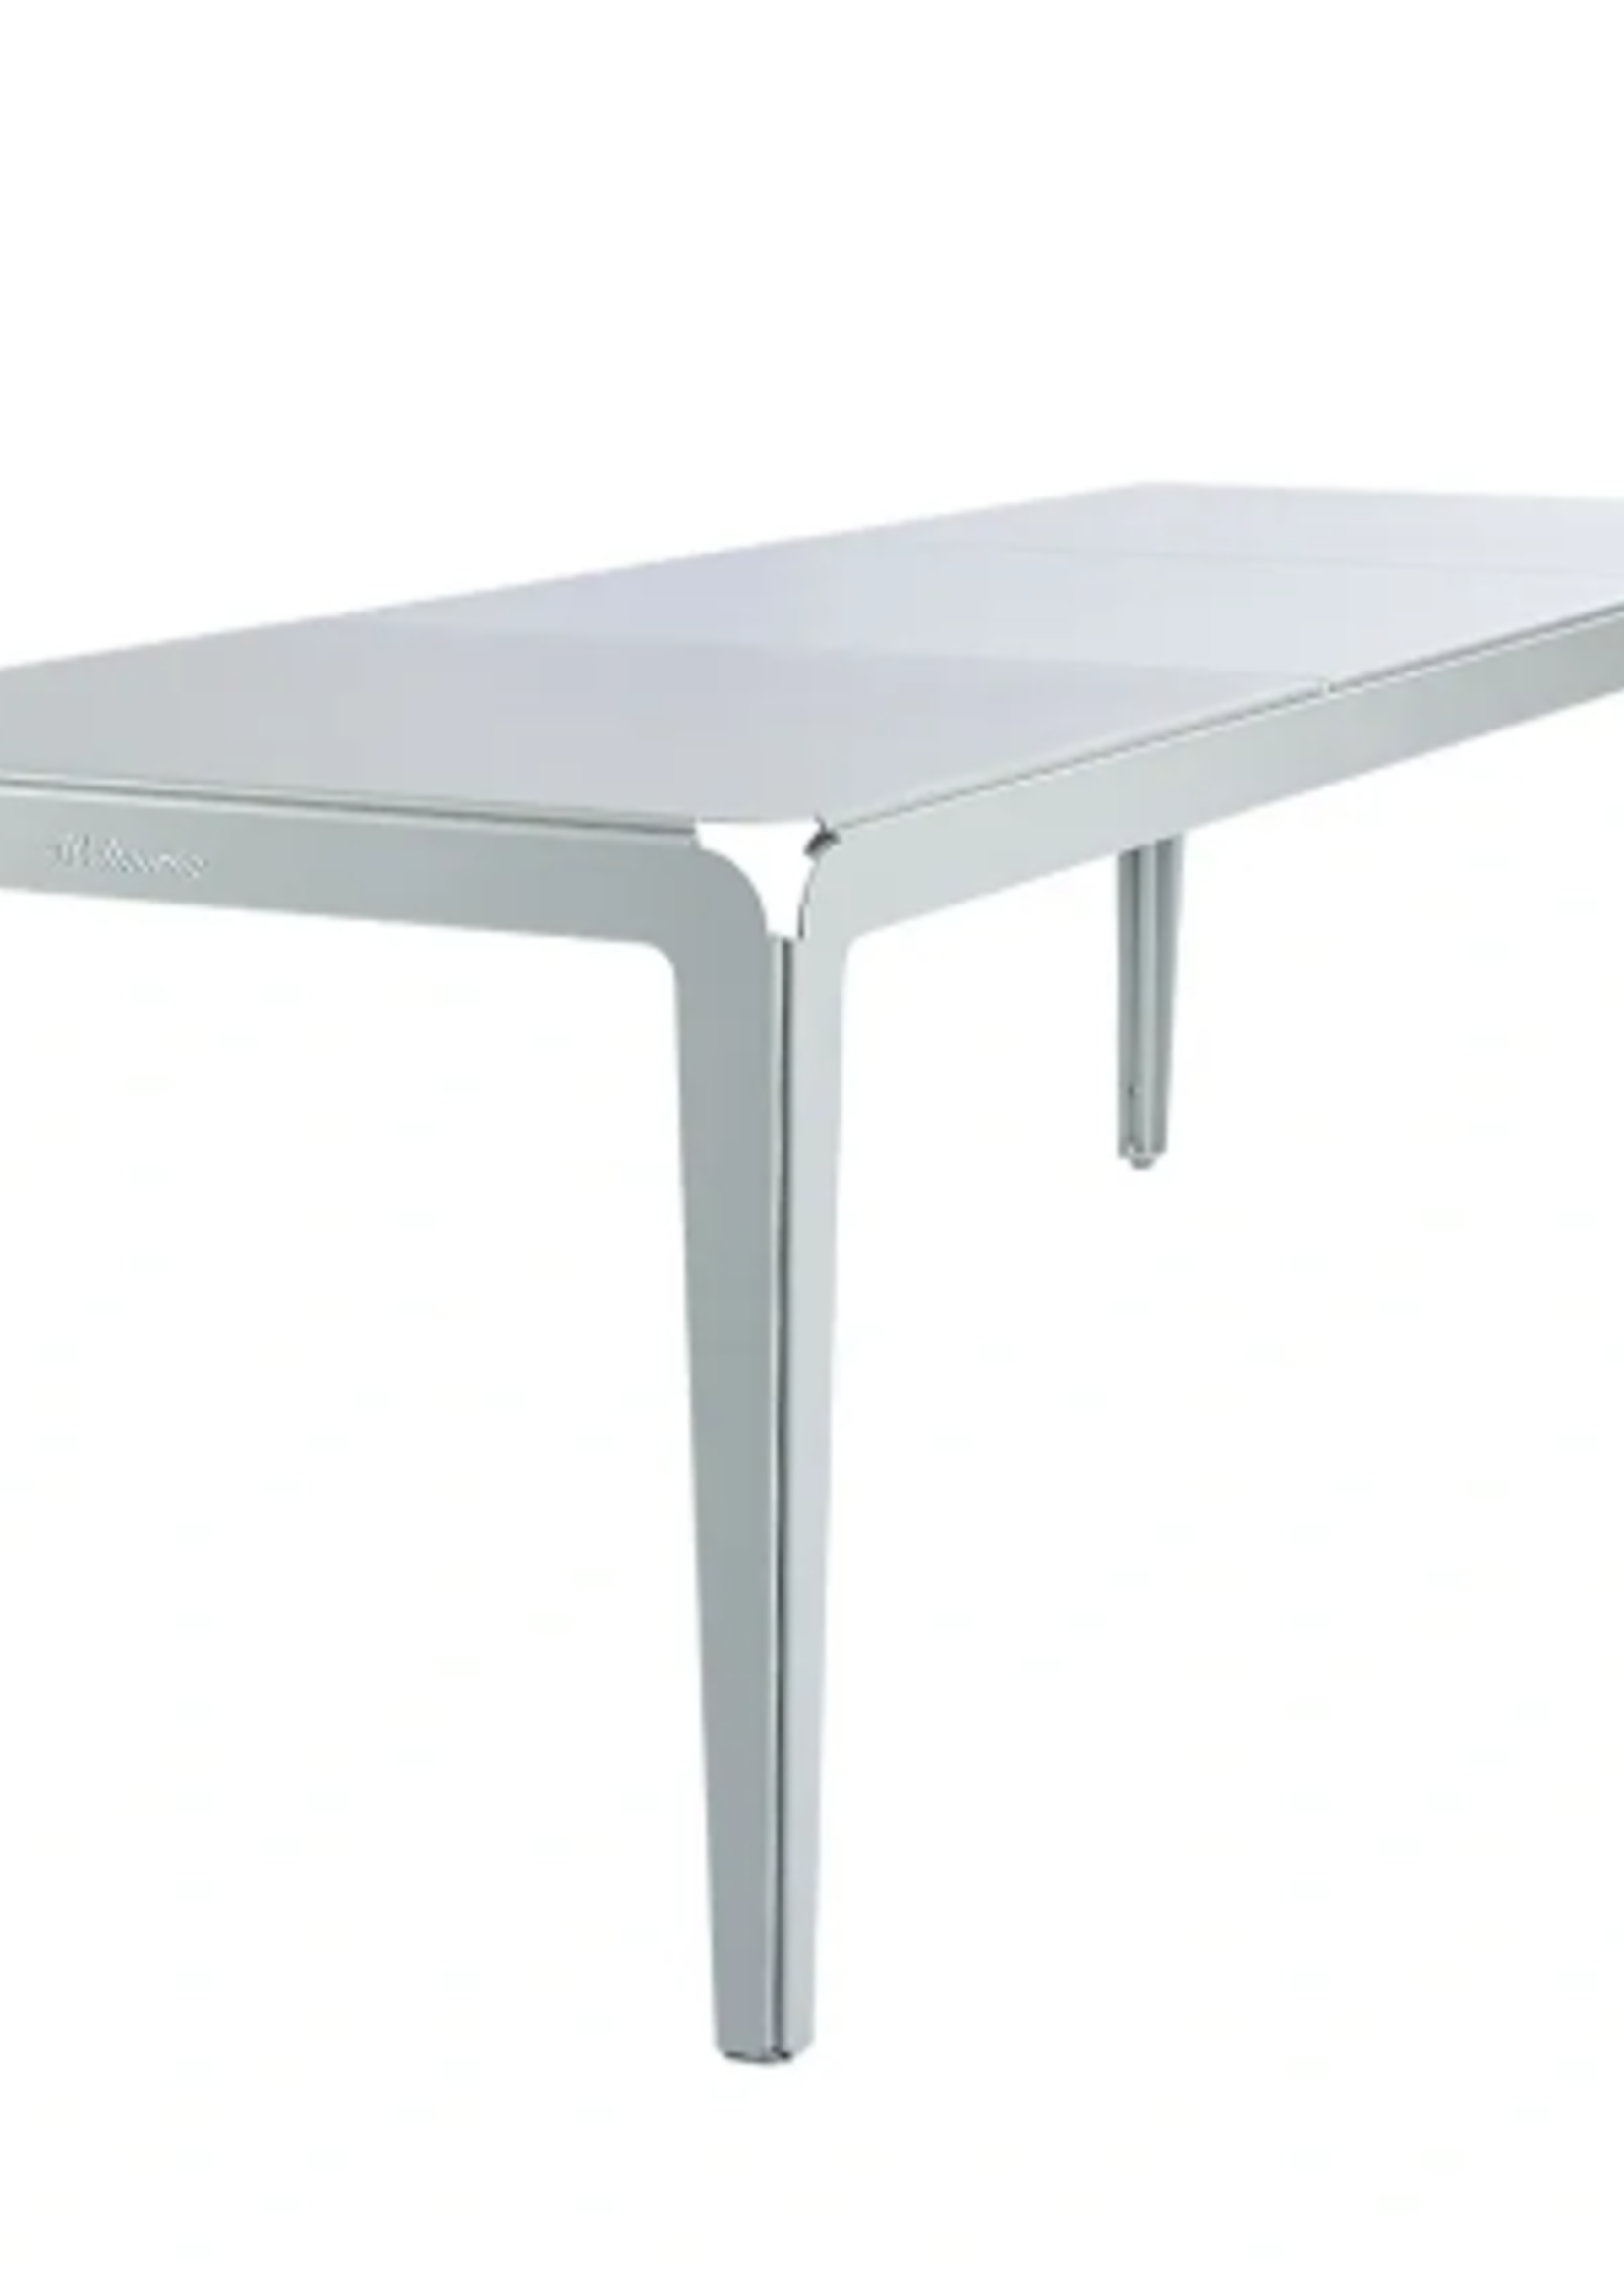 Weltevree Weltevree - Bended Table 270 - Table de jardin légère en aluminium - Gris agate